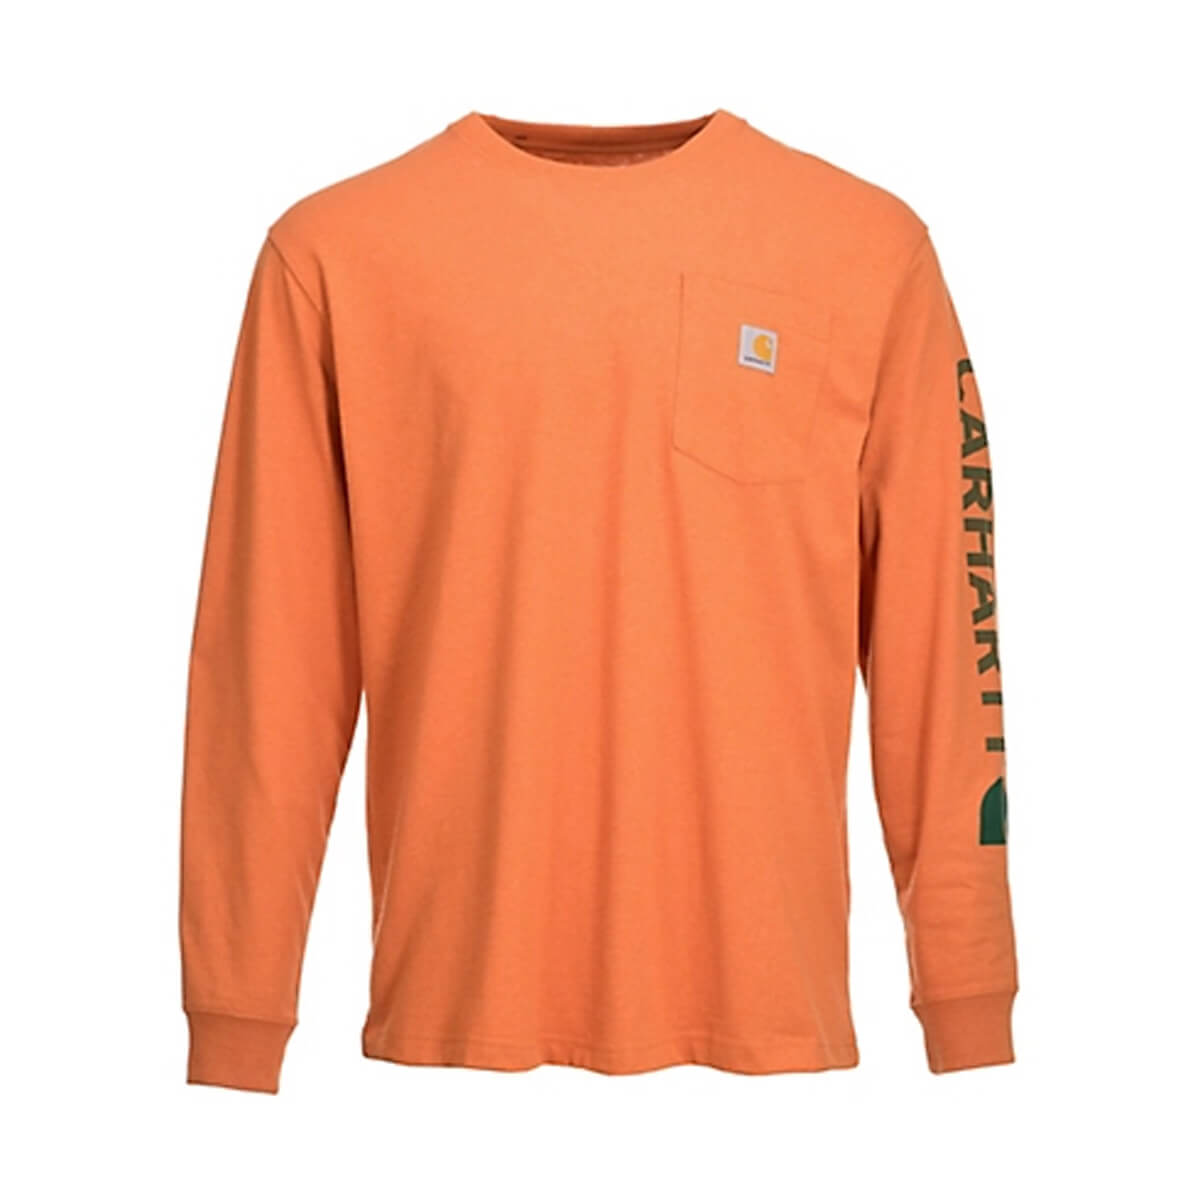 Carhartt Loose Fit Heavyweight Long-Sleeve Pocket Logo Graphic T-Shirt - Marmalade Heather